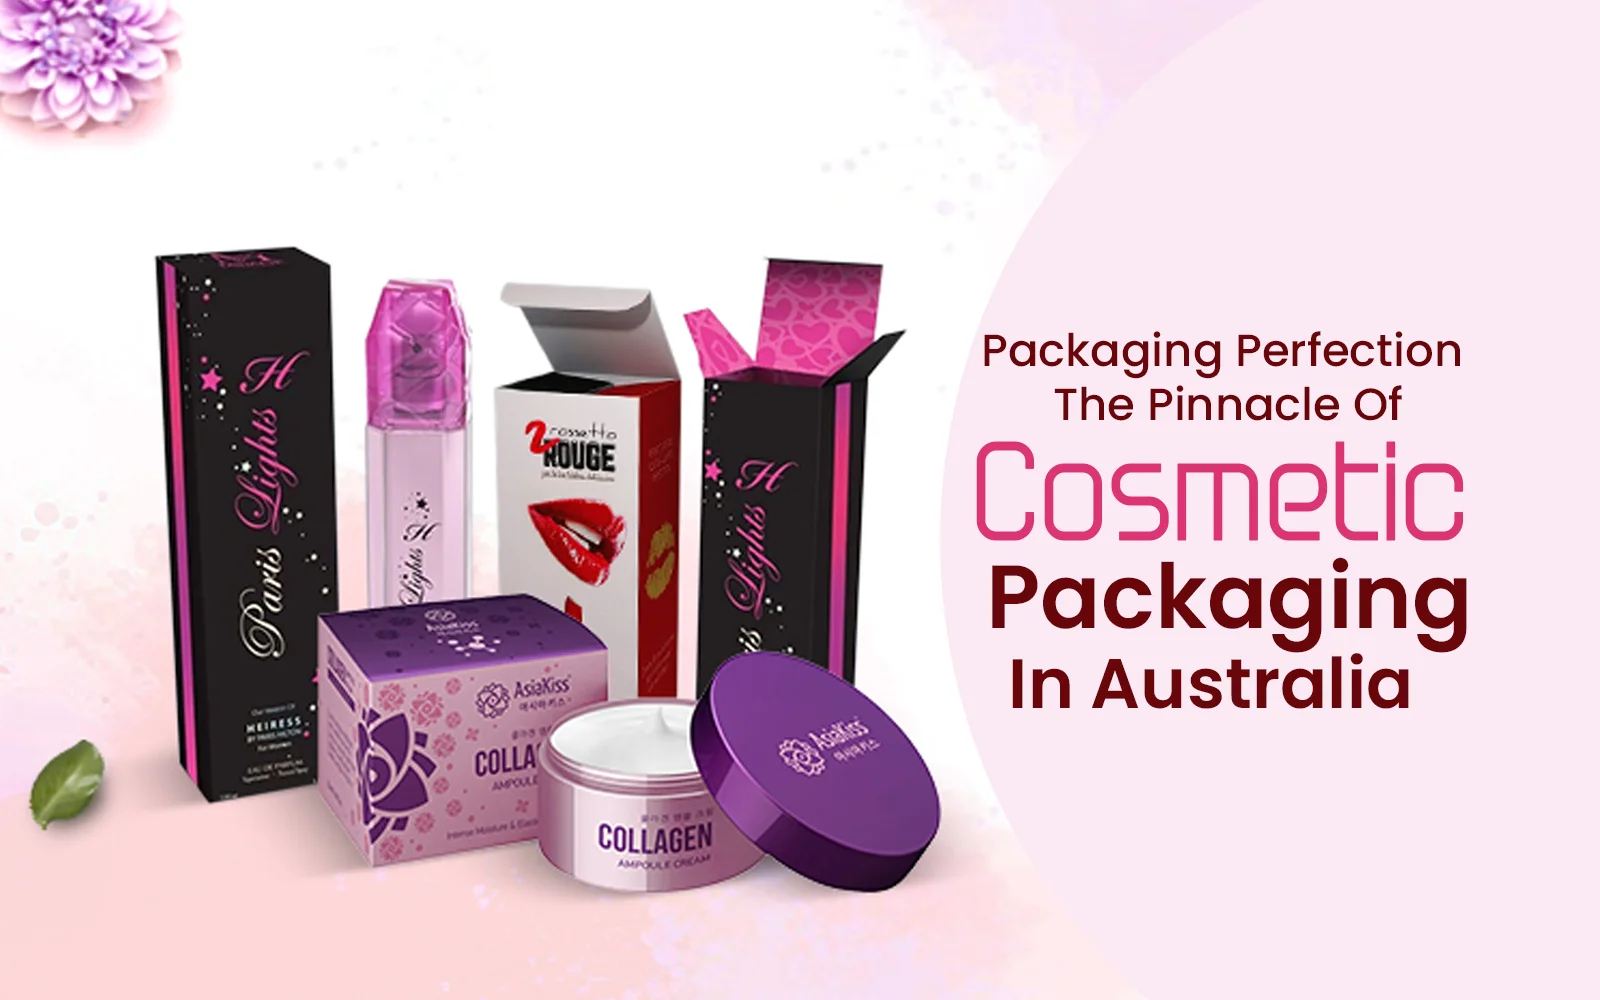 Packaging Perfection The Pinnacle Of Cosmetic Packaging In Australia